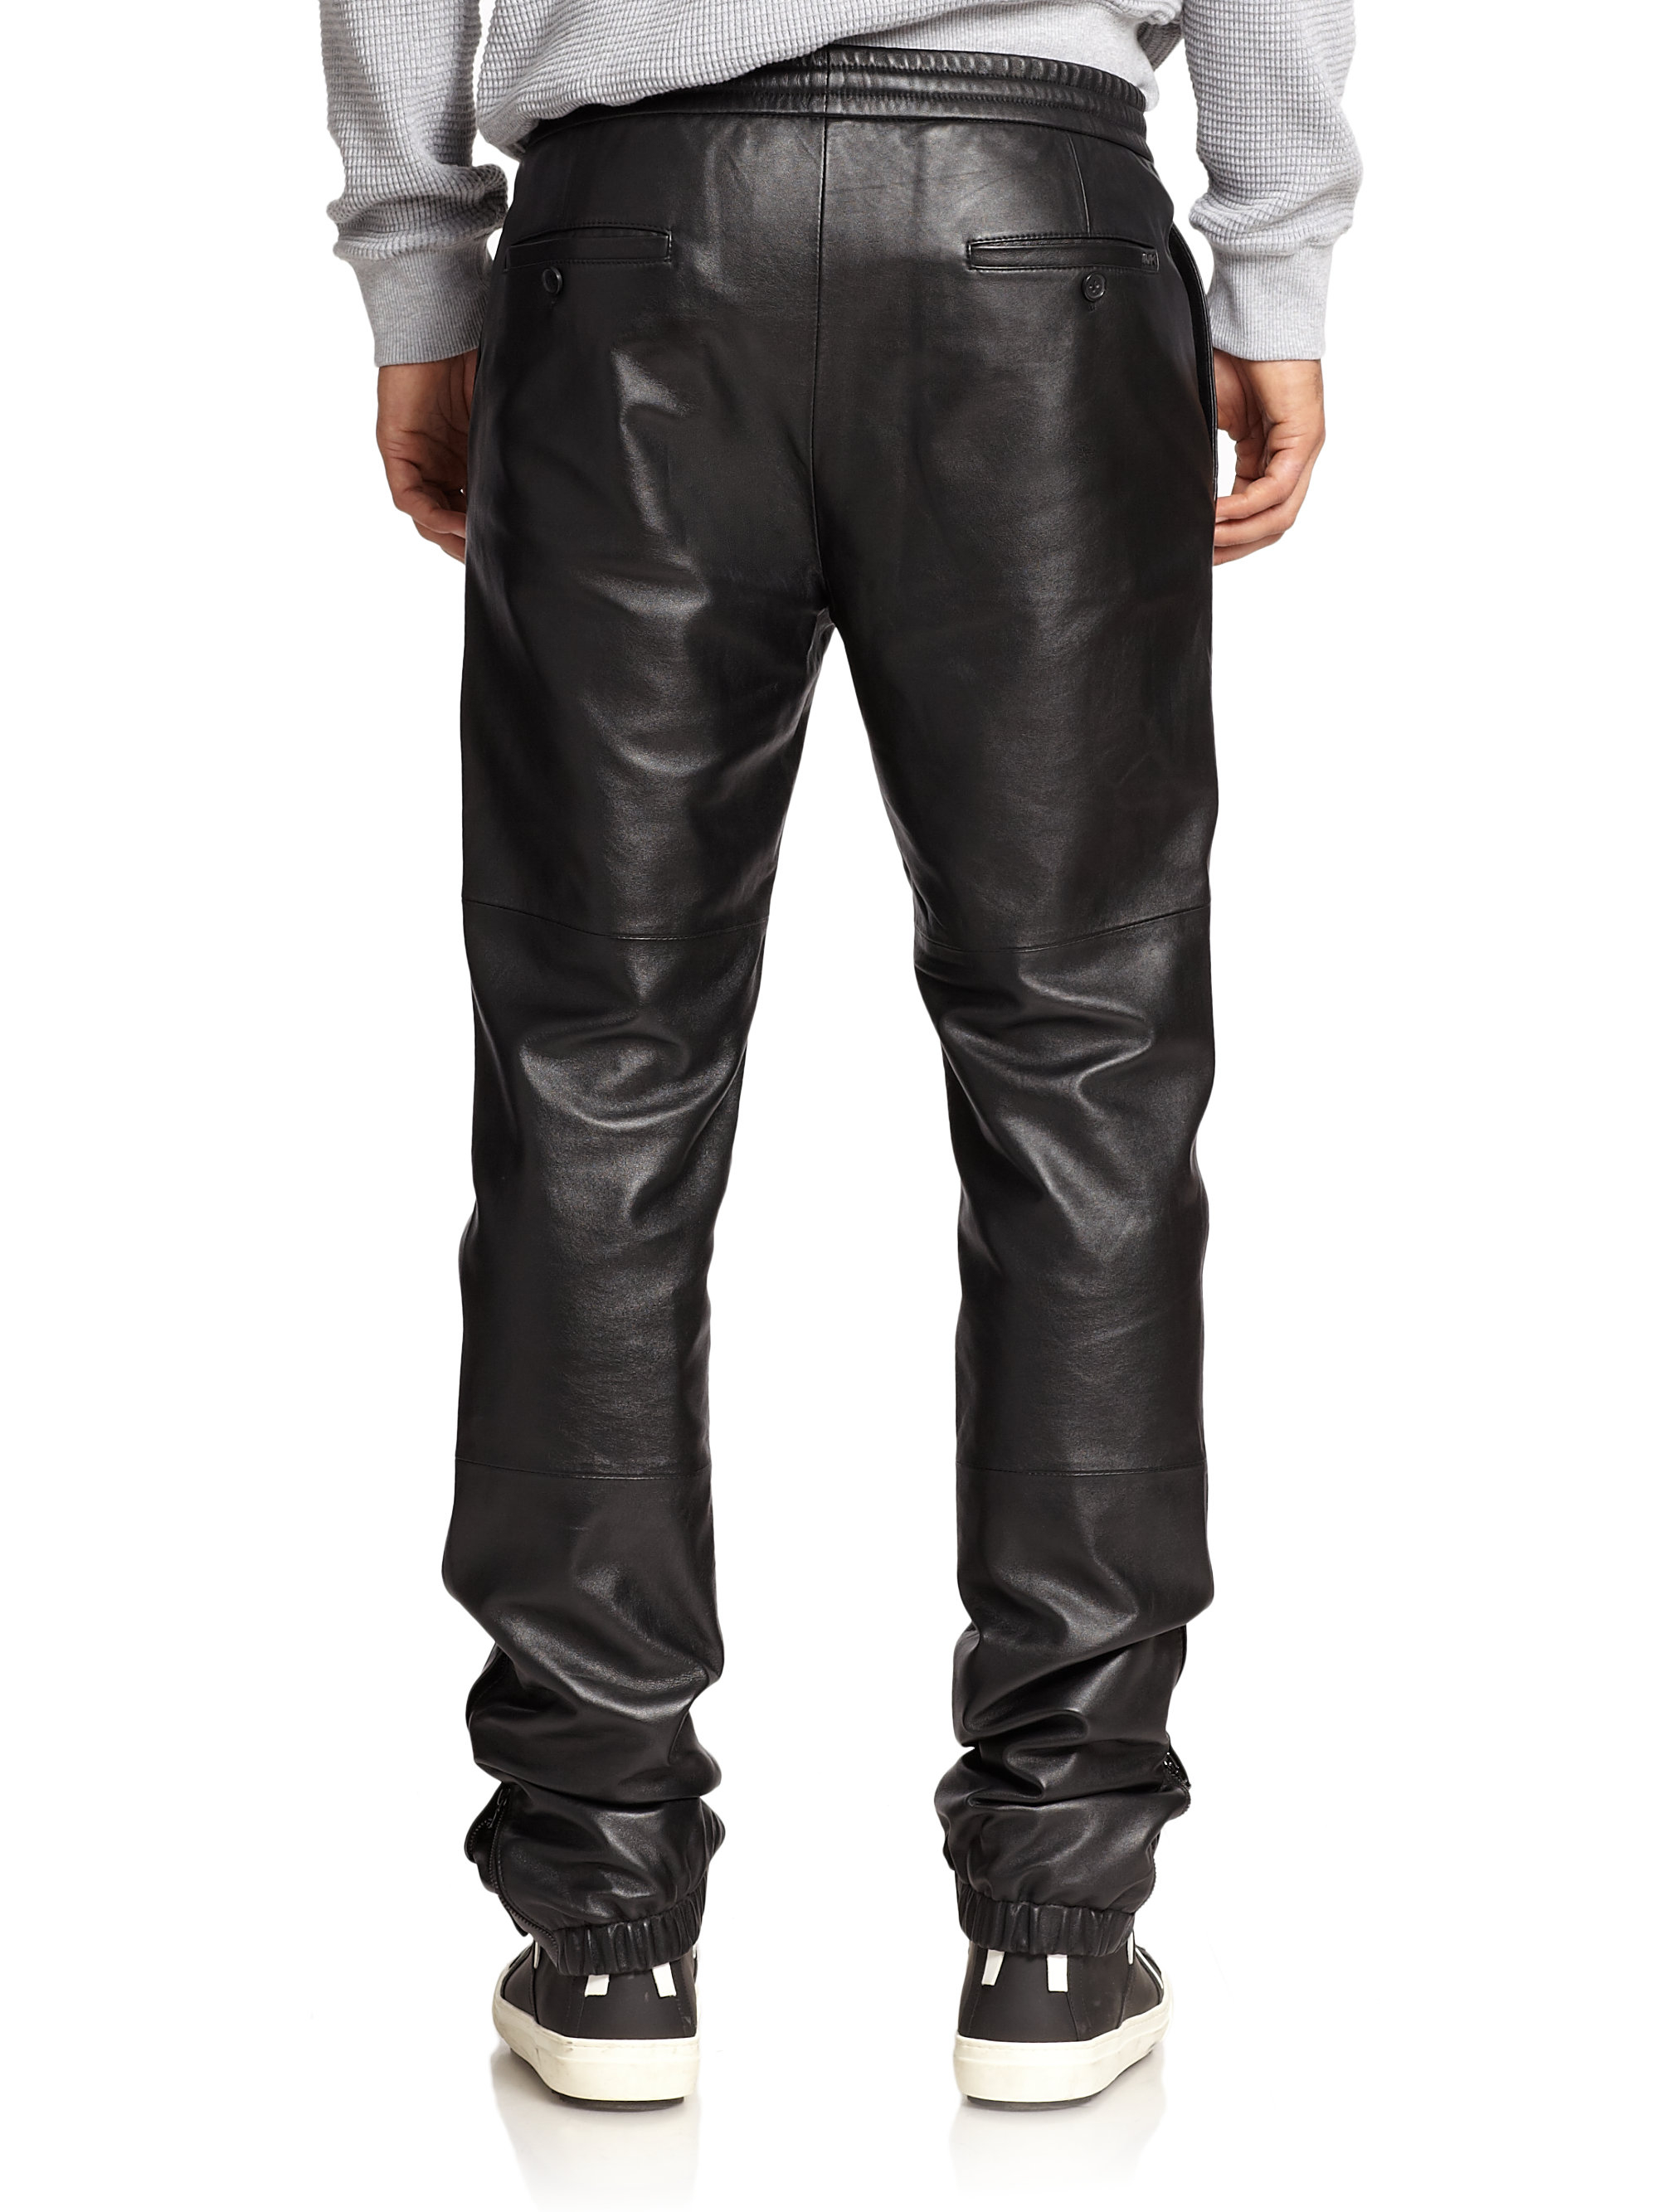 Lyst - Michael Kors Leather Track Pants in Black for Men